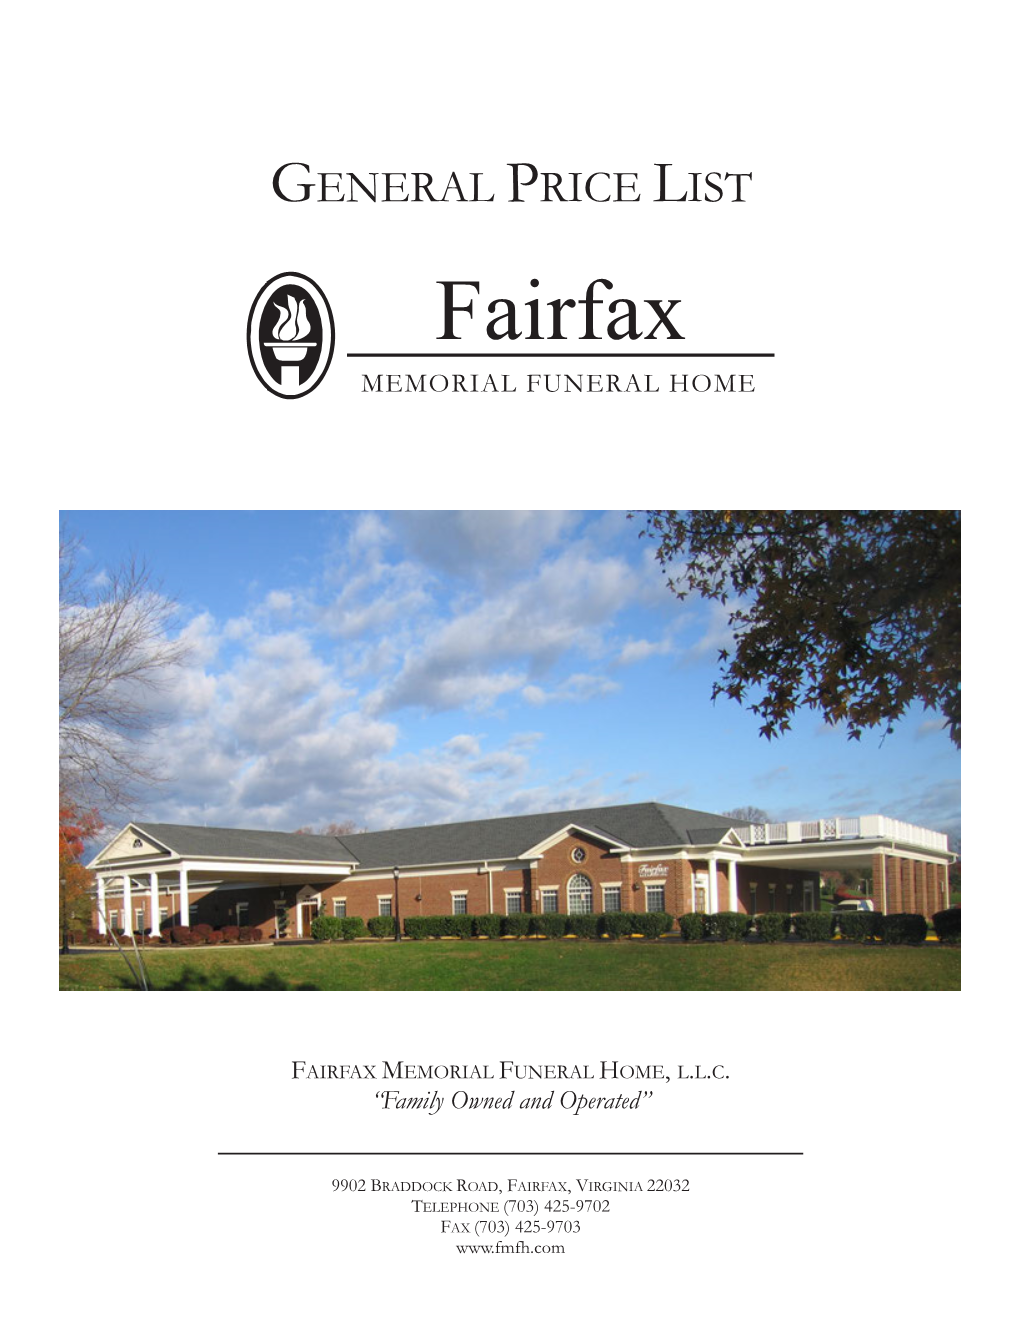 FMFH General Price List 052118 2